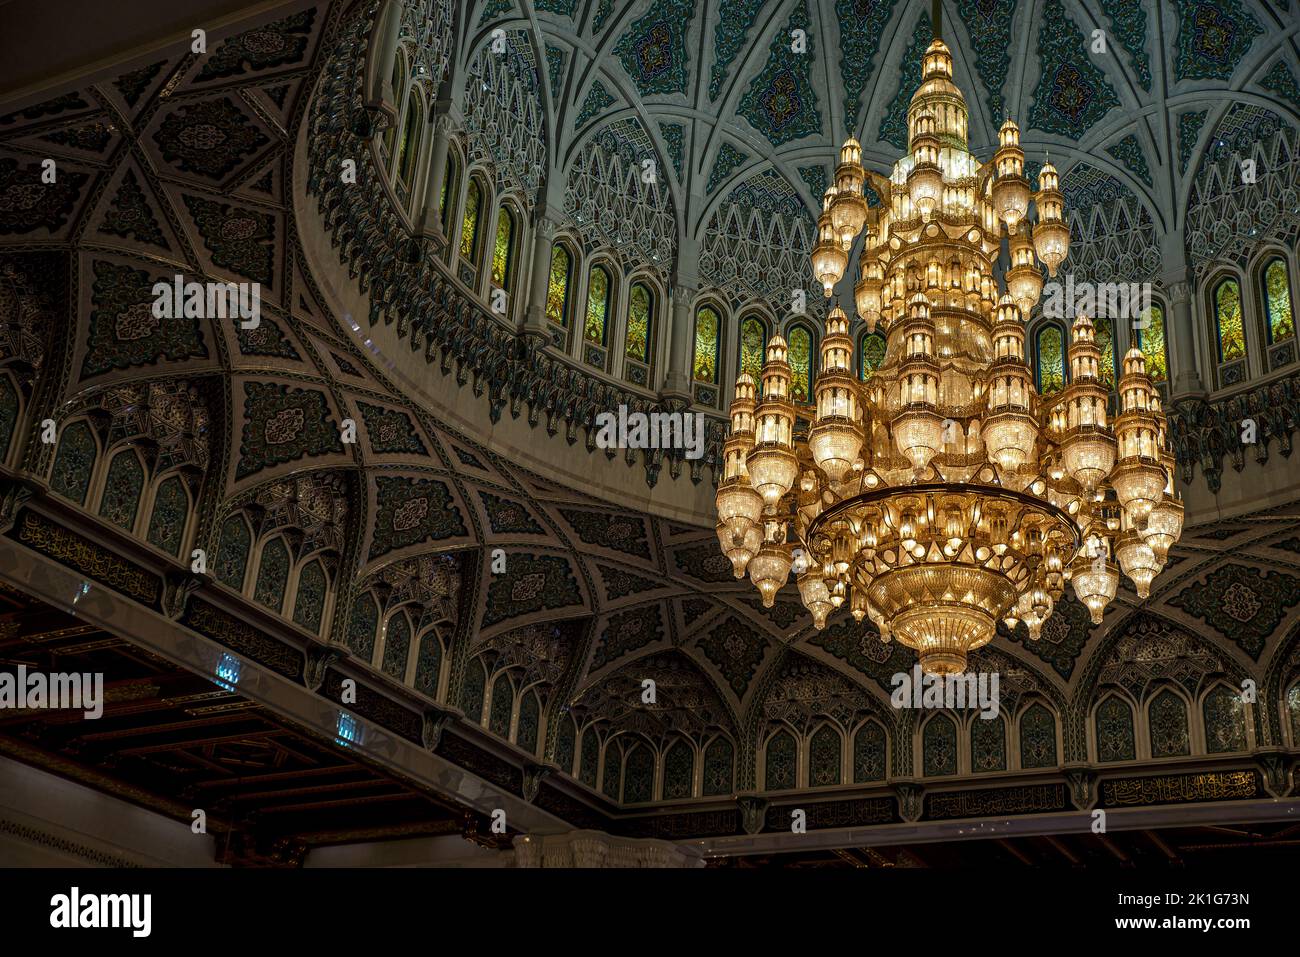 Huge chandelier at Sultan Qaboos Grand Mosque, Muscat, Oman Stock Photo